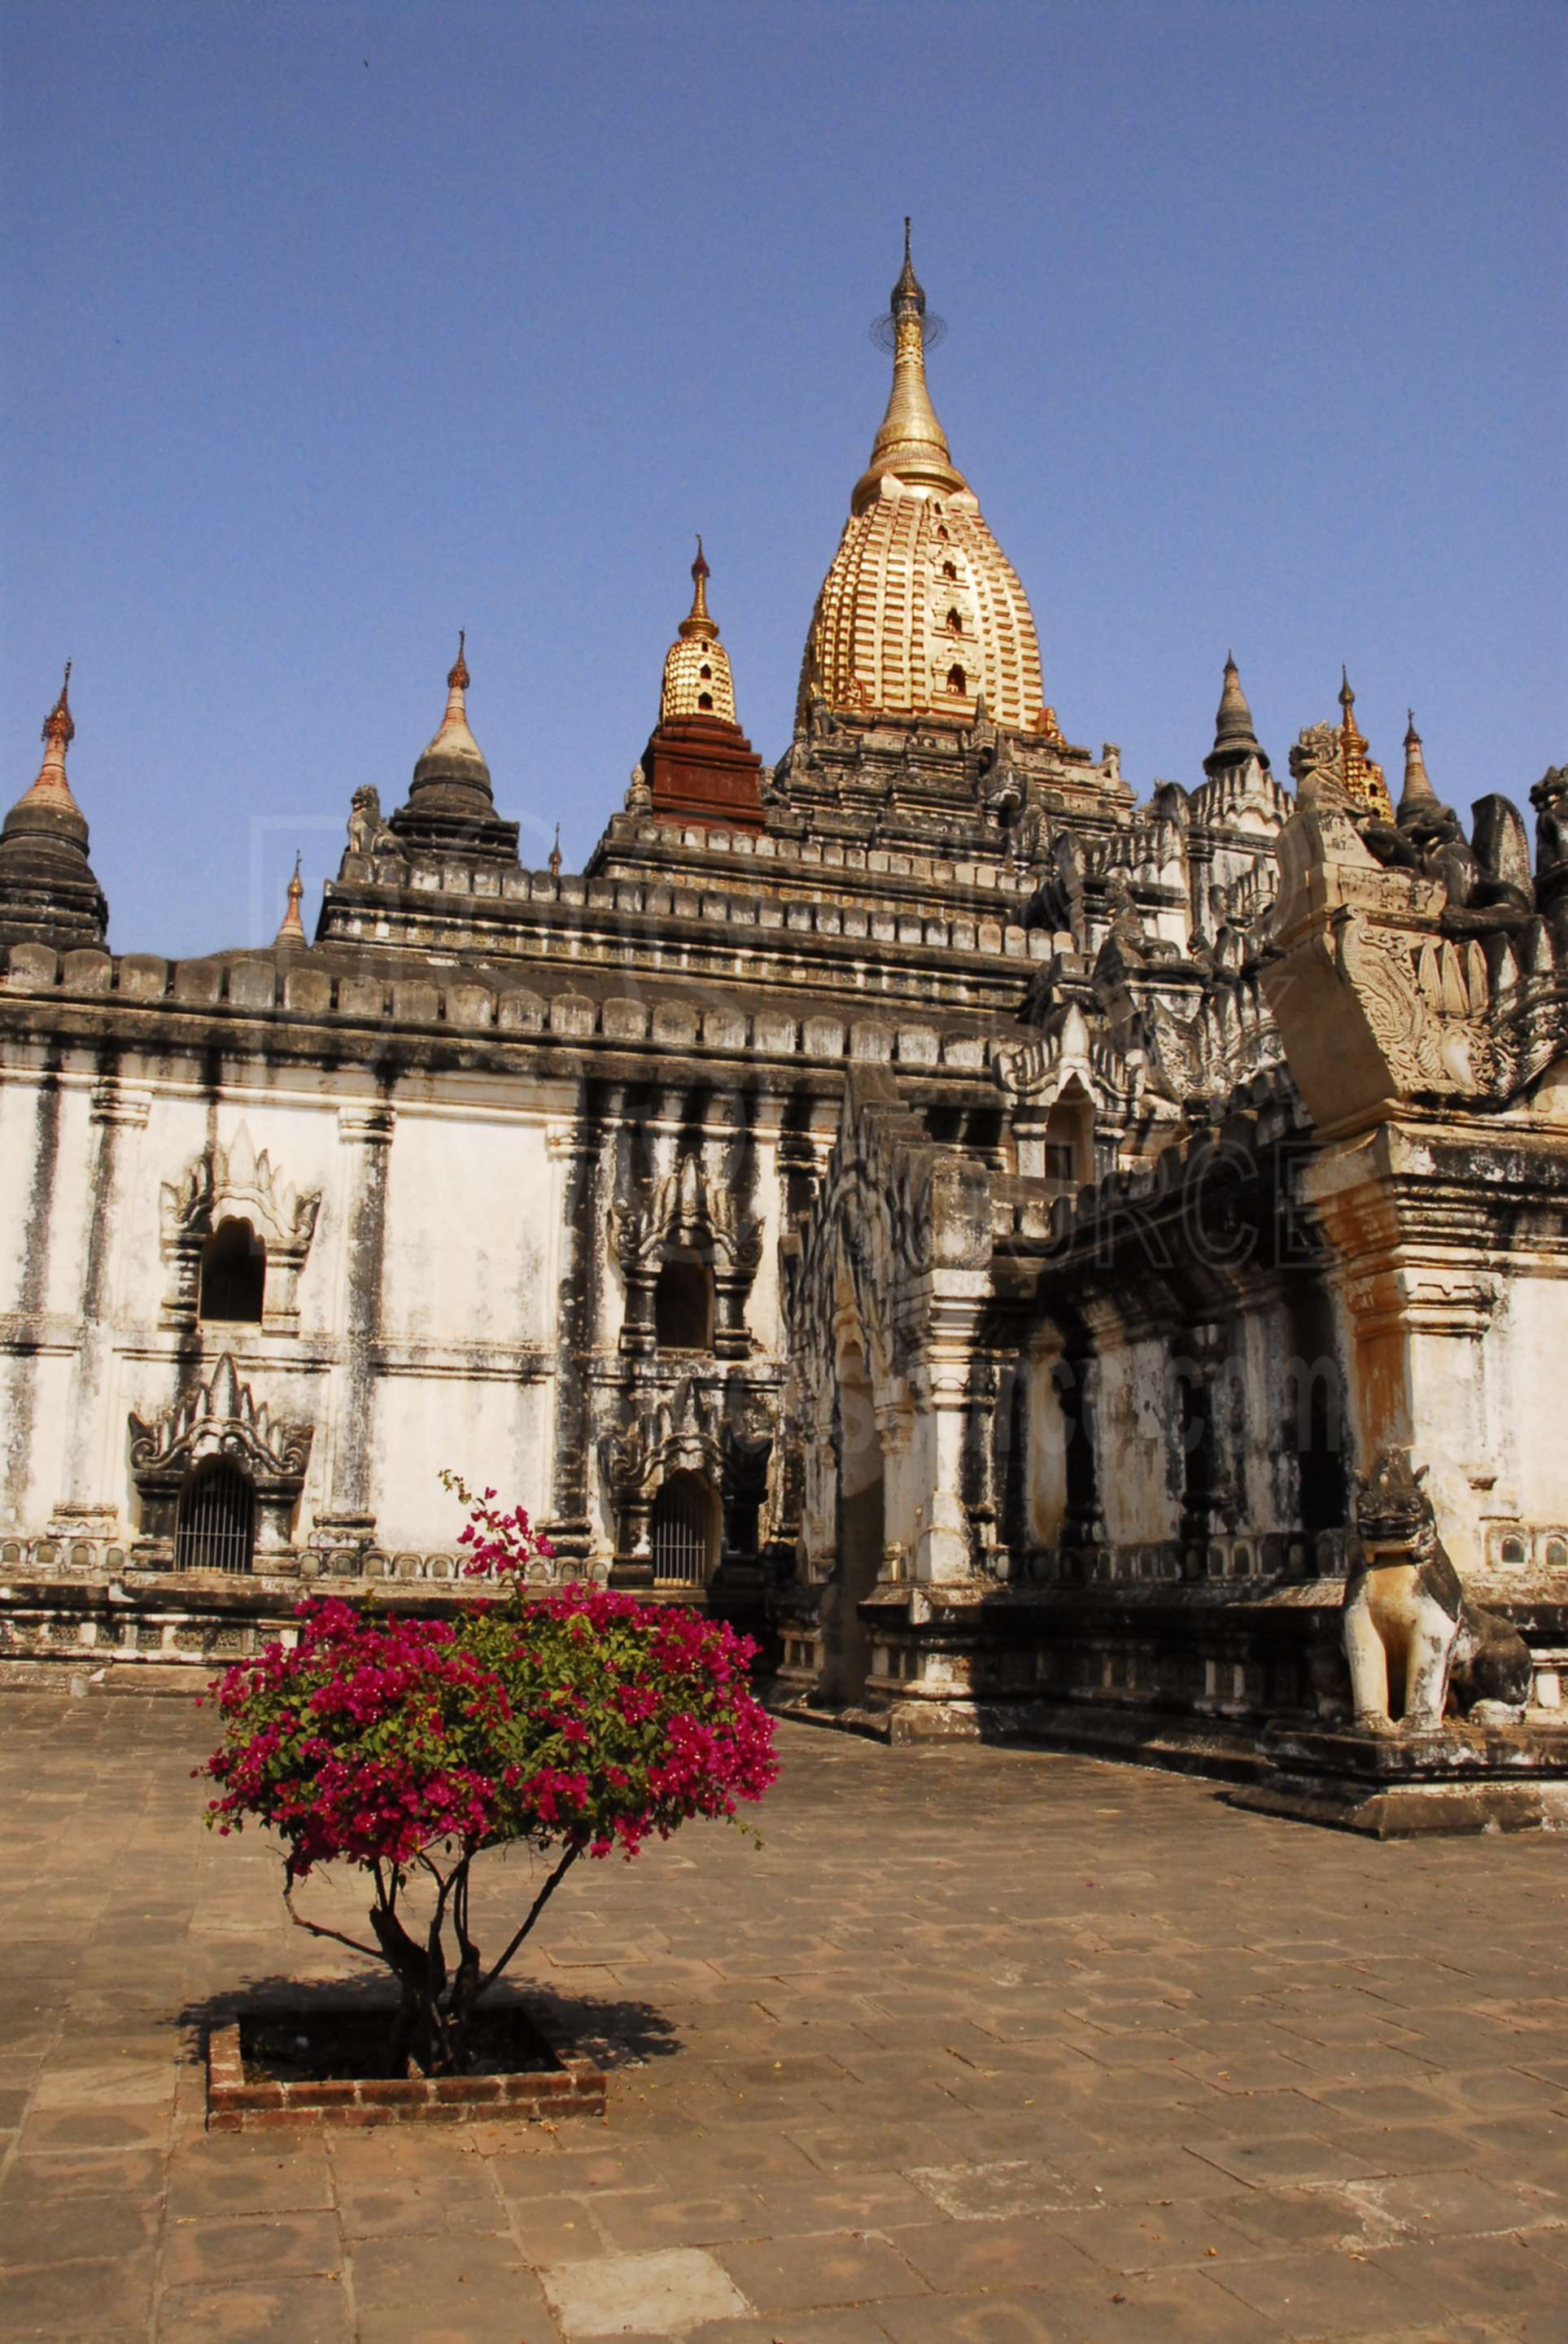 Ananda Pagoda Courtyard,myanmar,ananda,ananda pahto,paya,temple,pagoda,religion,temples,buddhism,religious,shrine,bougainvillea